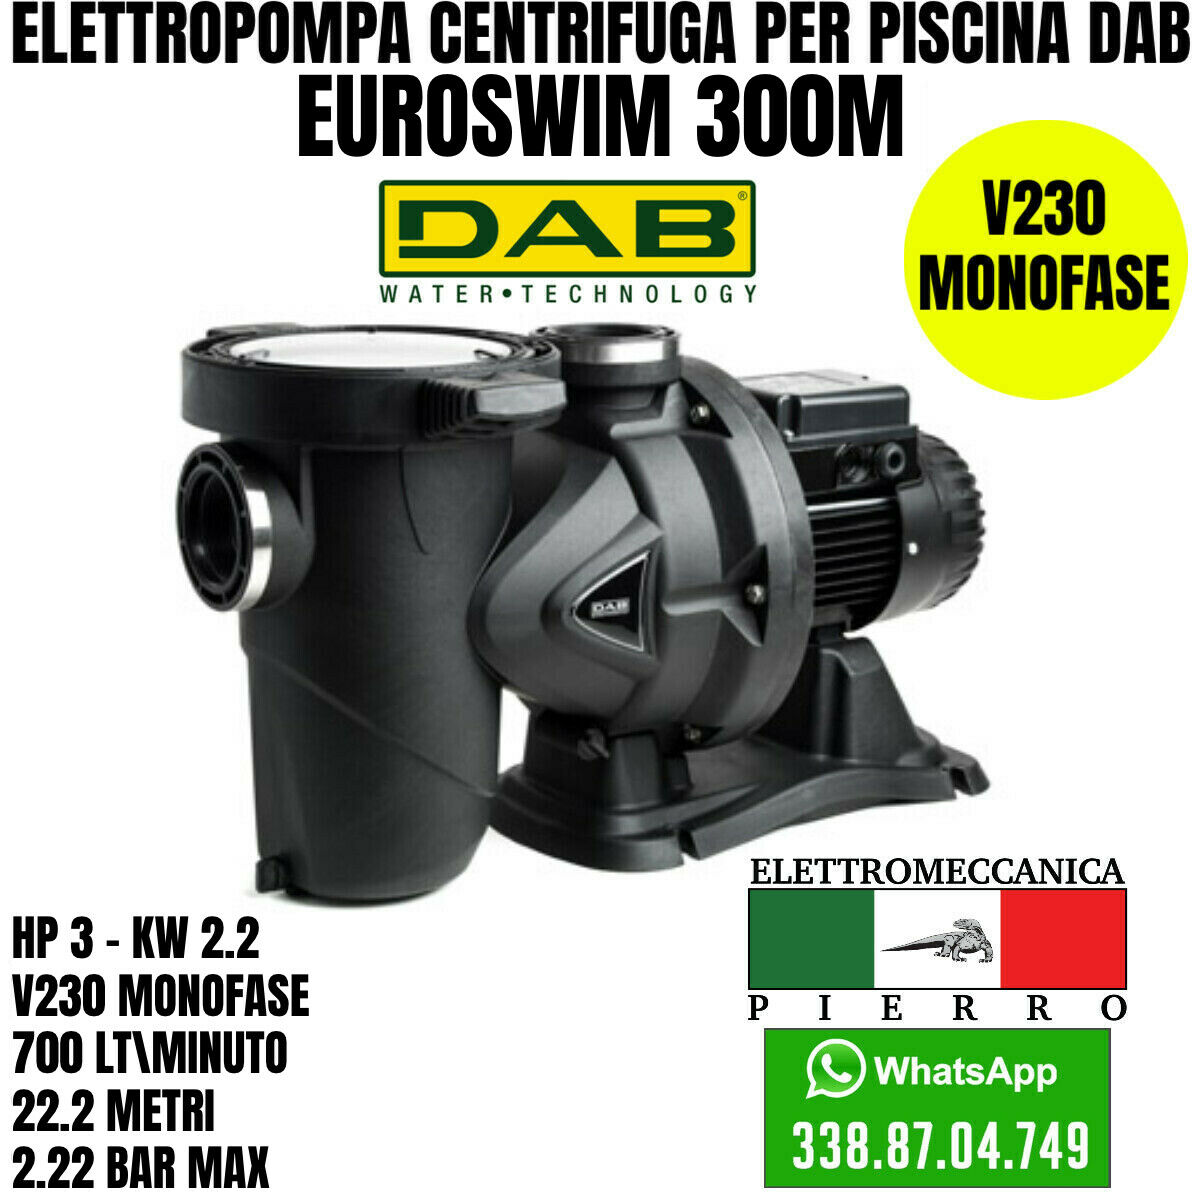 Pompa per piscina DAB EuroSwim EuroPro Elettropompa centrifuga piscine HP 0/3 Logo Elettromeccanica Pierro Elettromeccanica Express Assistenza EuroSwim 300M Hp 3 - KW 2.2 700LT/Minuto 22,2 Metri 2,2 BAR MAX V230